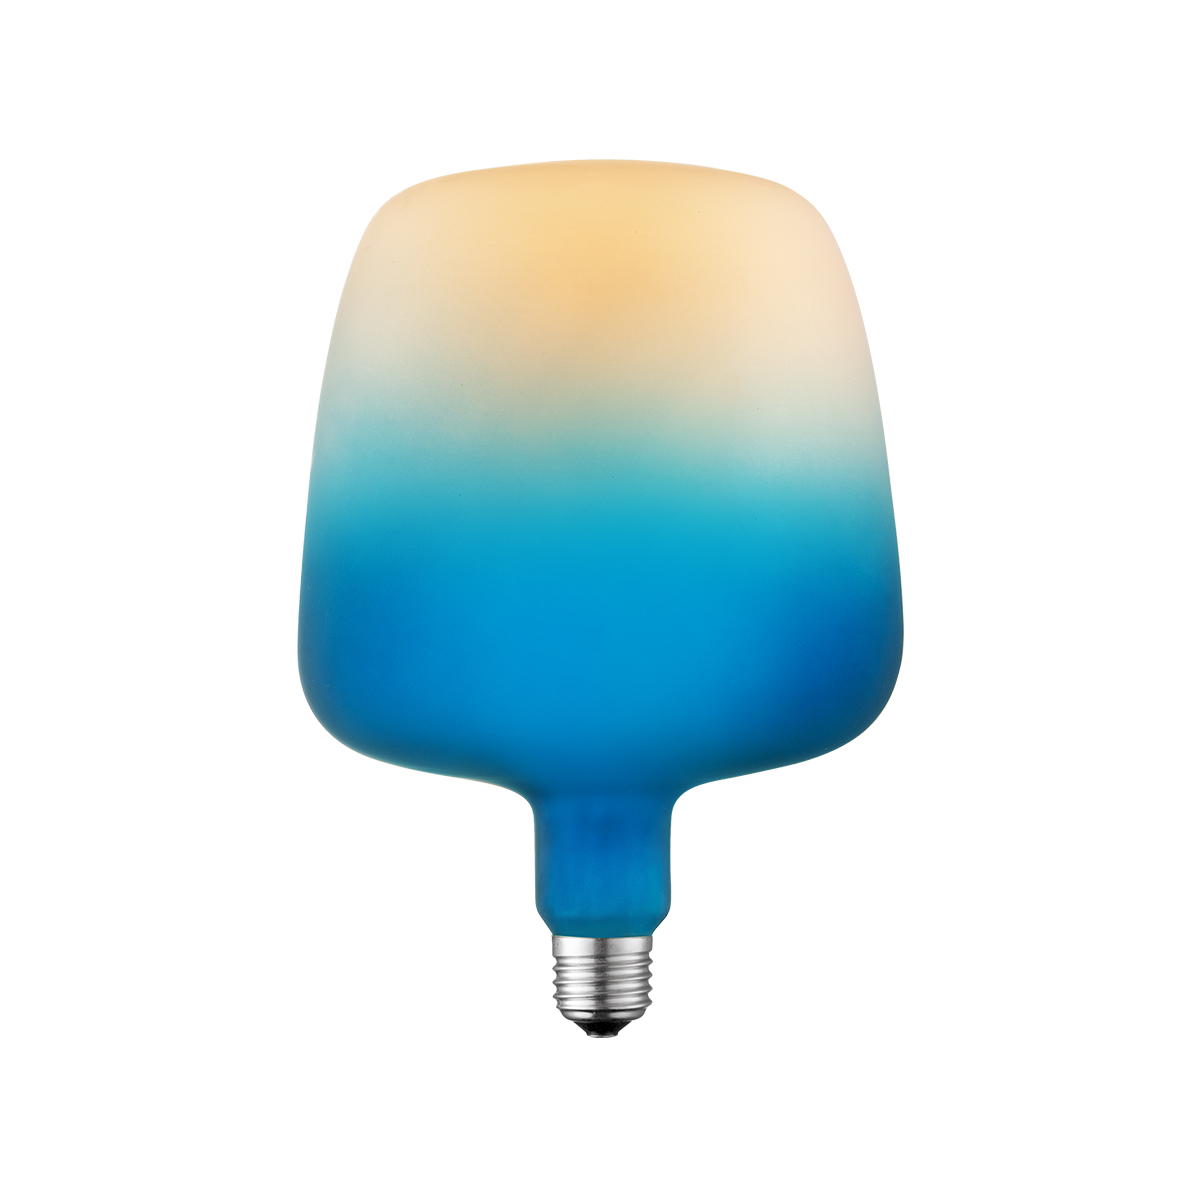 Tangla lighting - TLB-9003-04M - LED Light Bulb Single Spiral filament - 4W gradient blue opal - large - non dimmable - E27